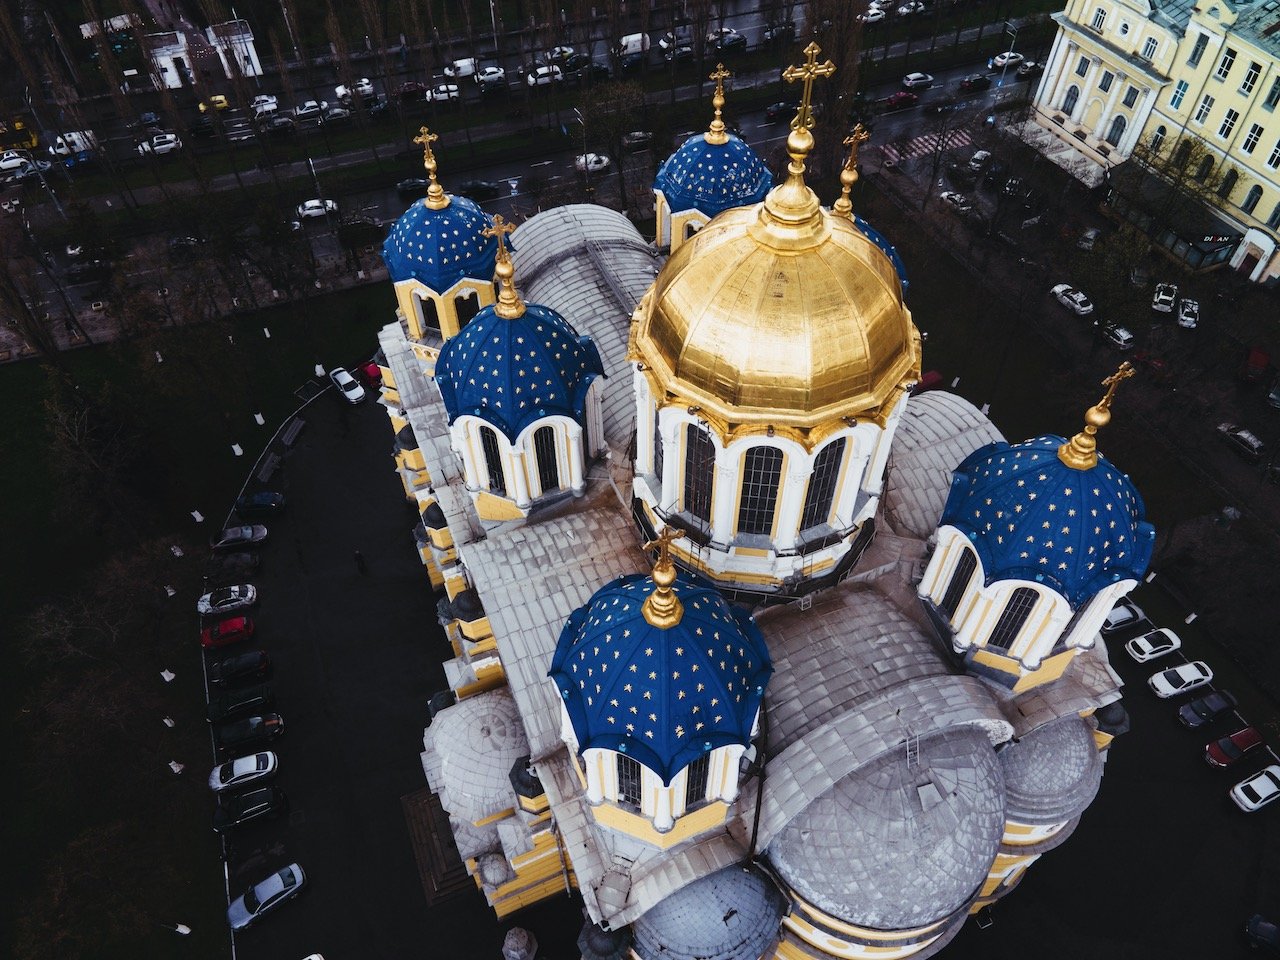   St. Volodymyr's Cathedral, Kiev, Ukraine (ISO 160, 4.5 mm,  f /2.8, 1/15 s)  